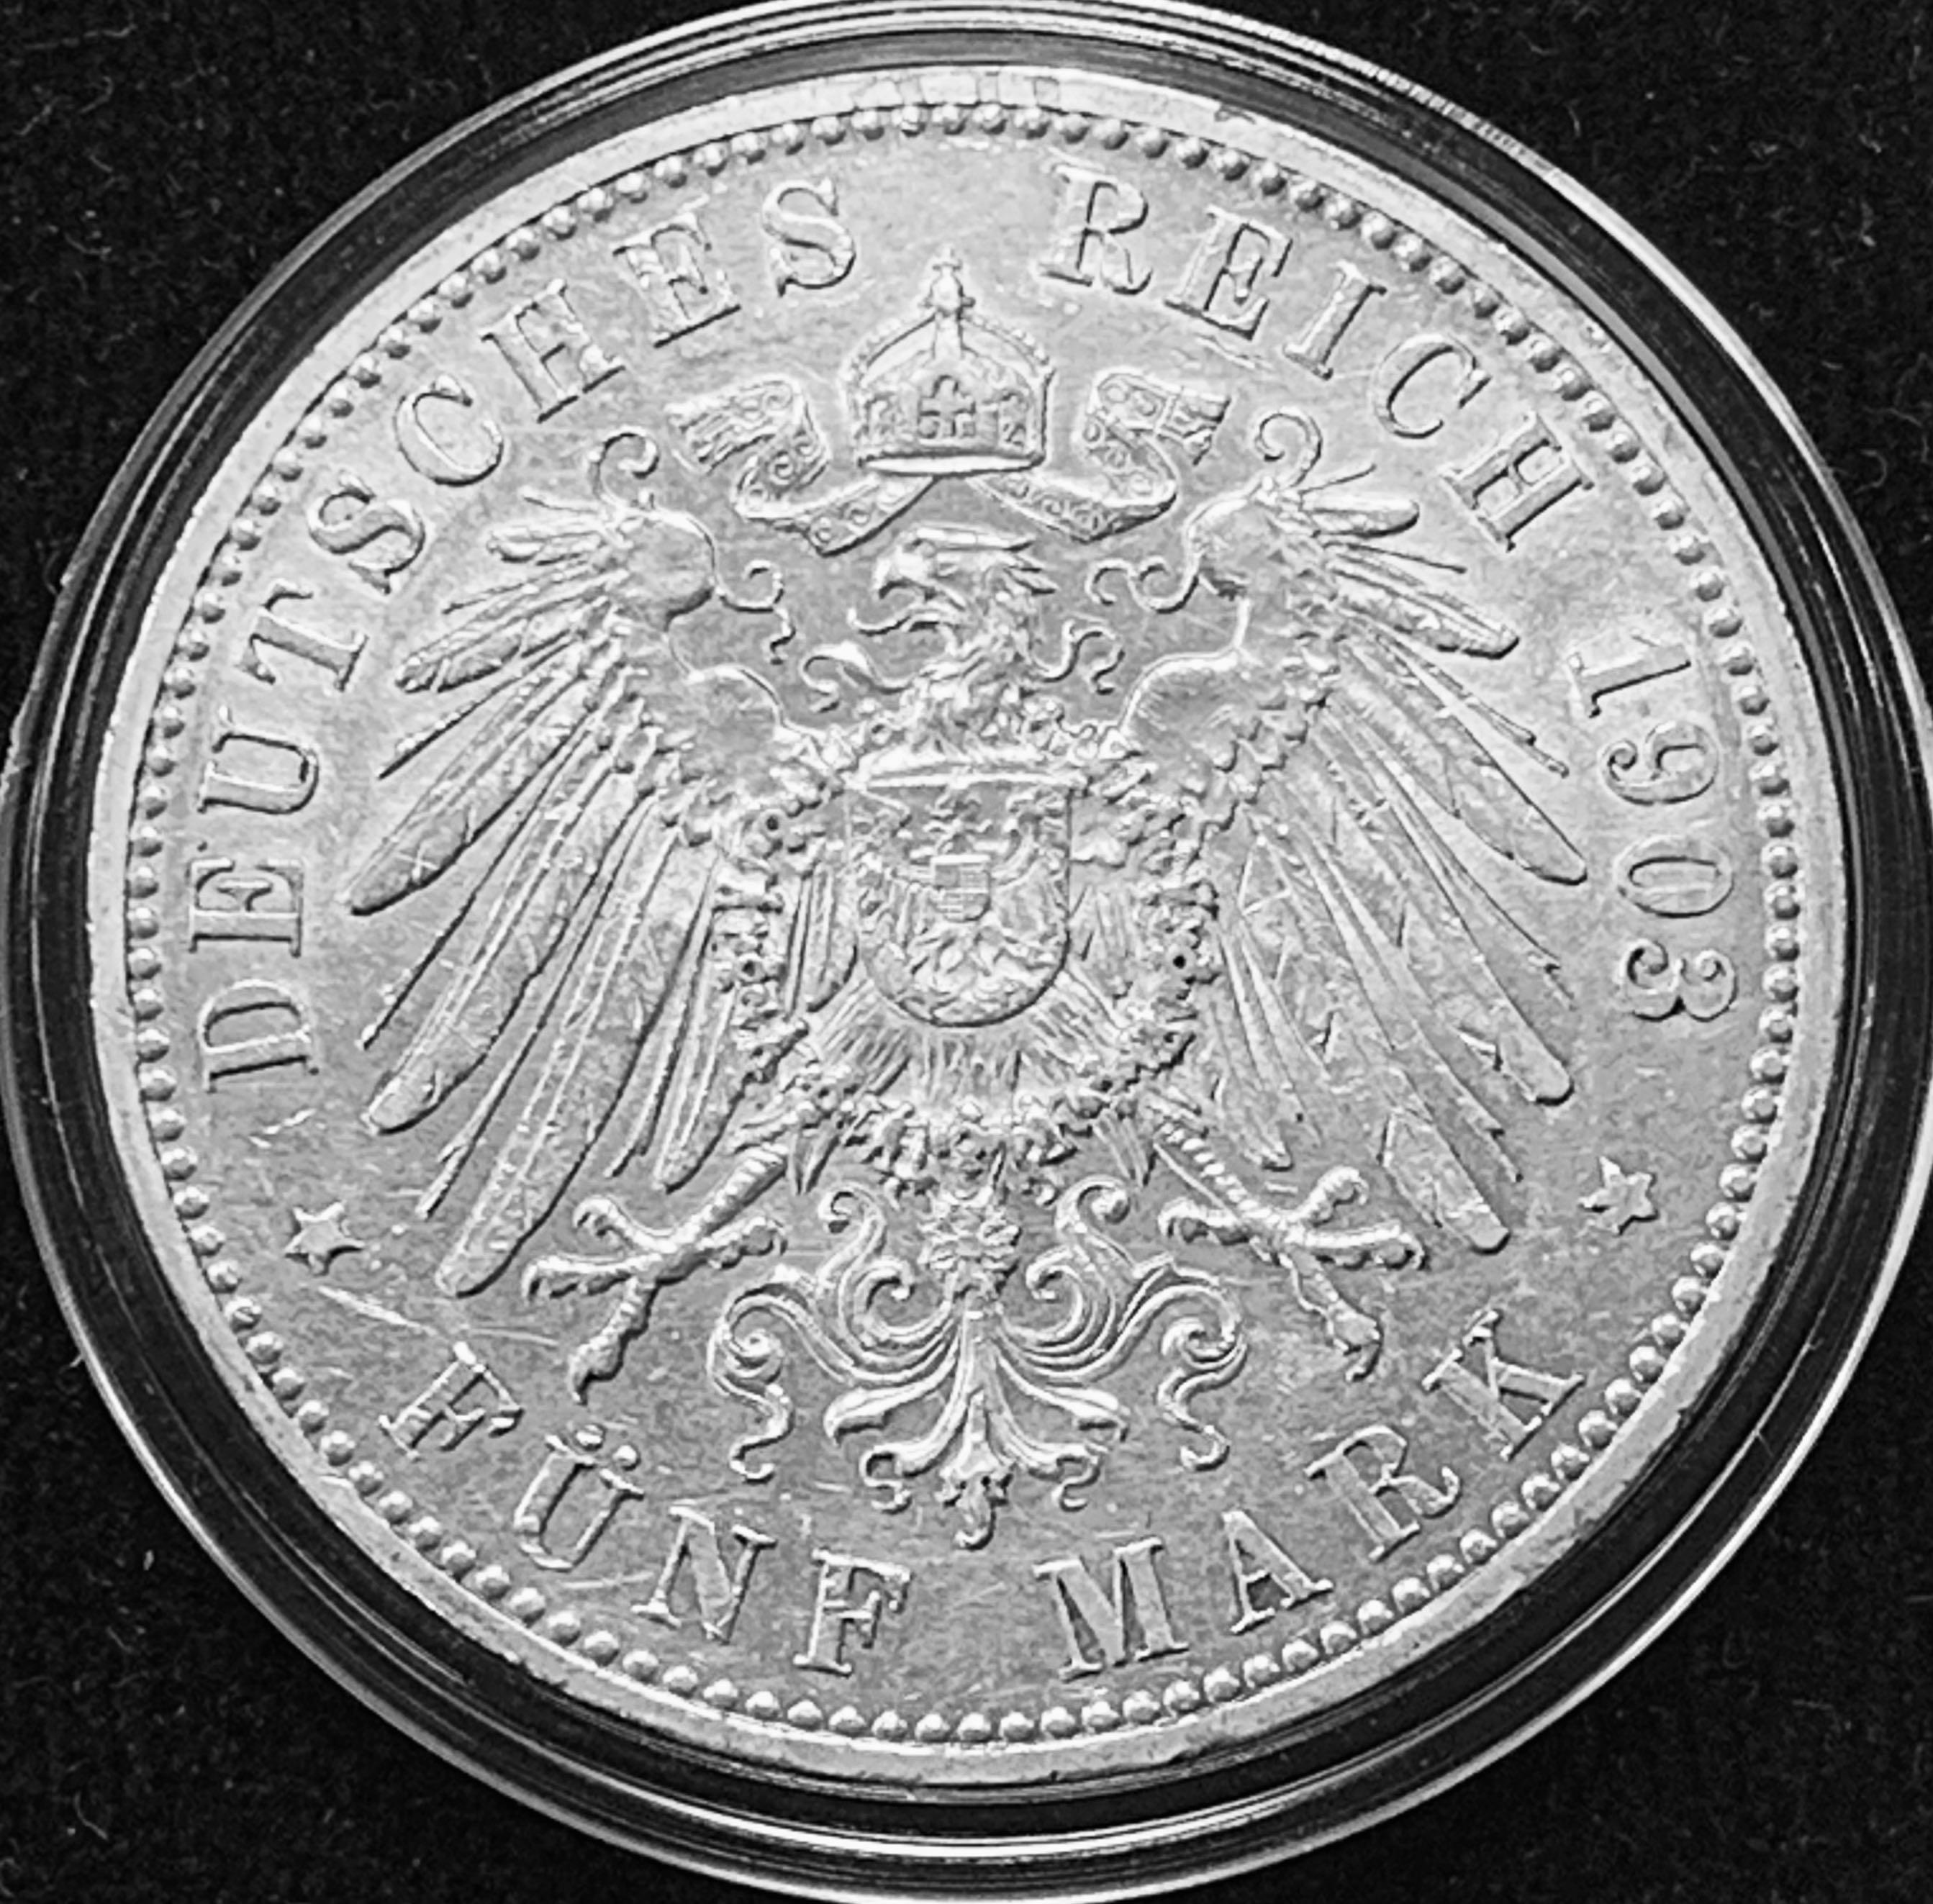 Quarter Anna 1947 Rare Coin of India, 100% Authenticity Assurance